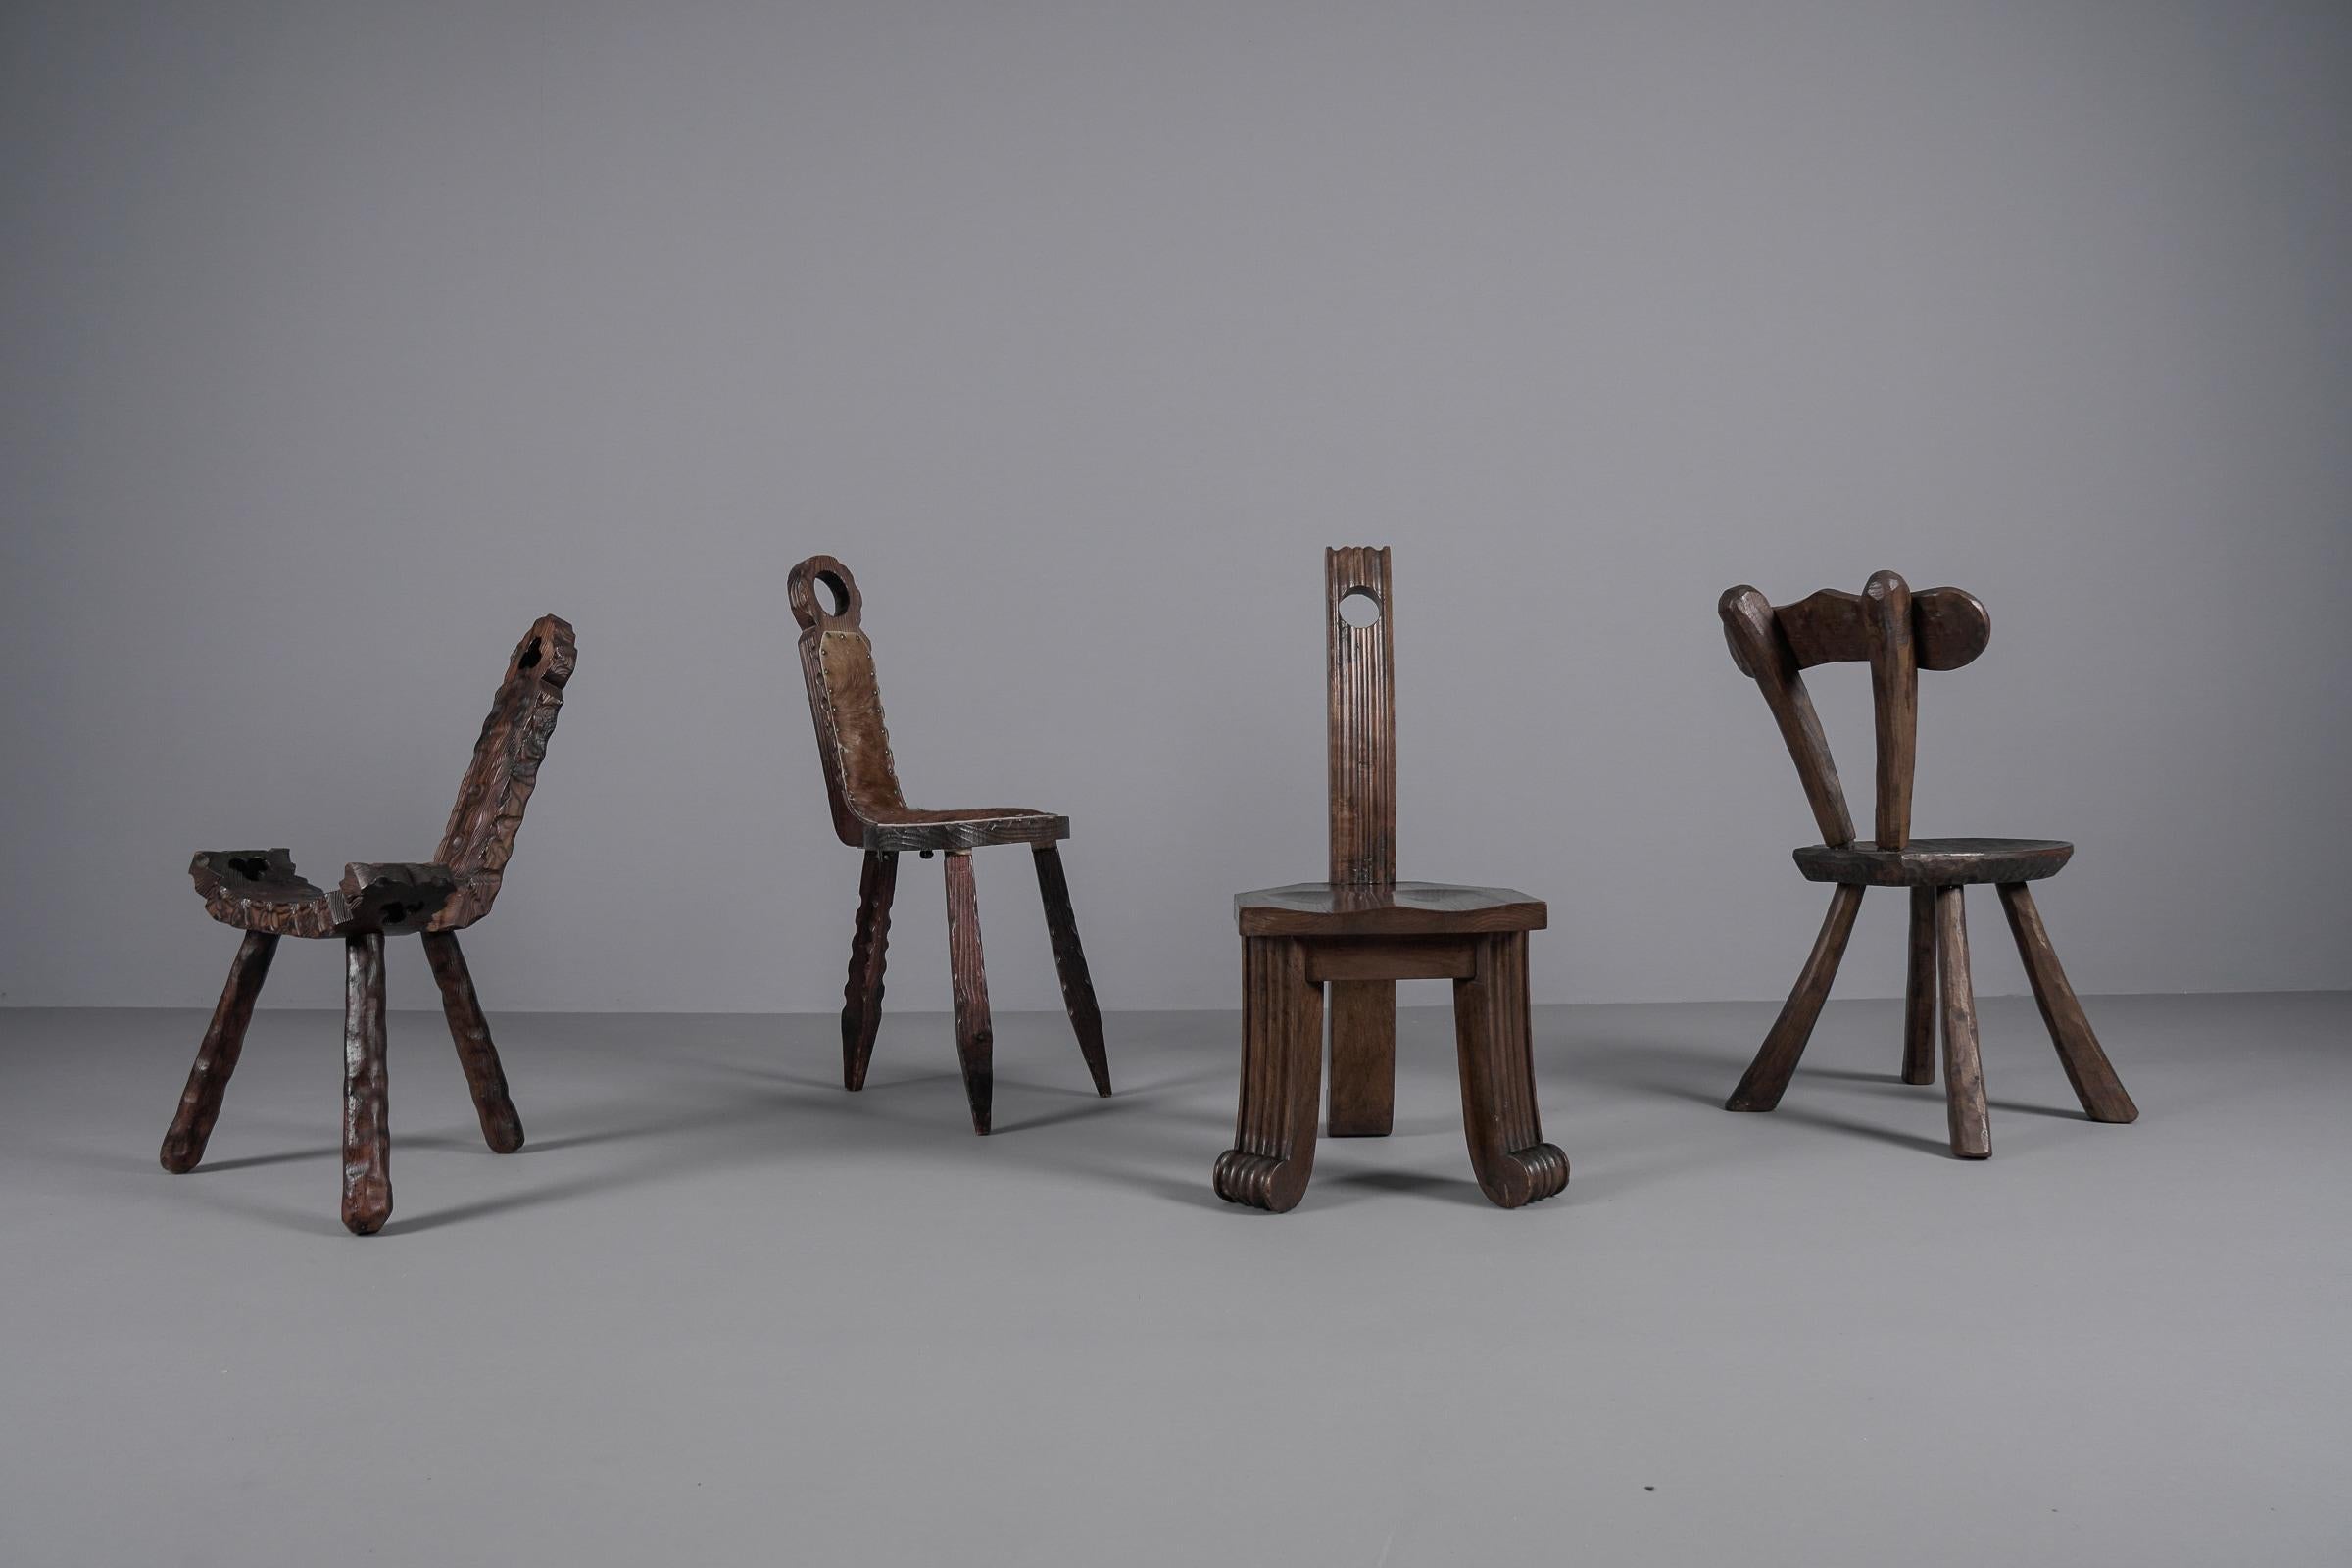 Primitive Rustic Britalist Modern Sculptured Chair, 1940s Europe 6